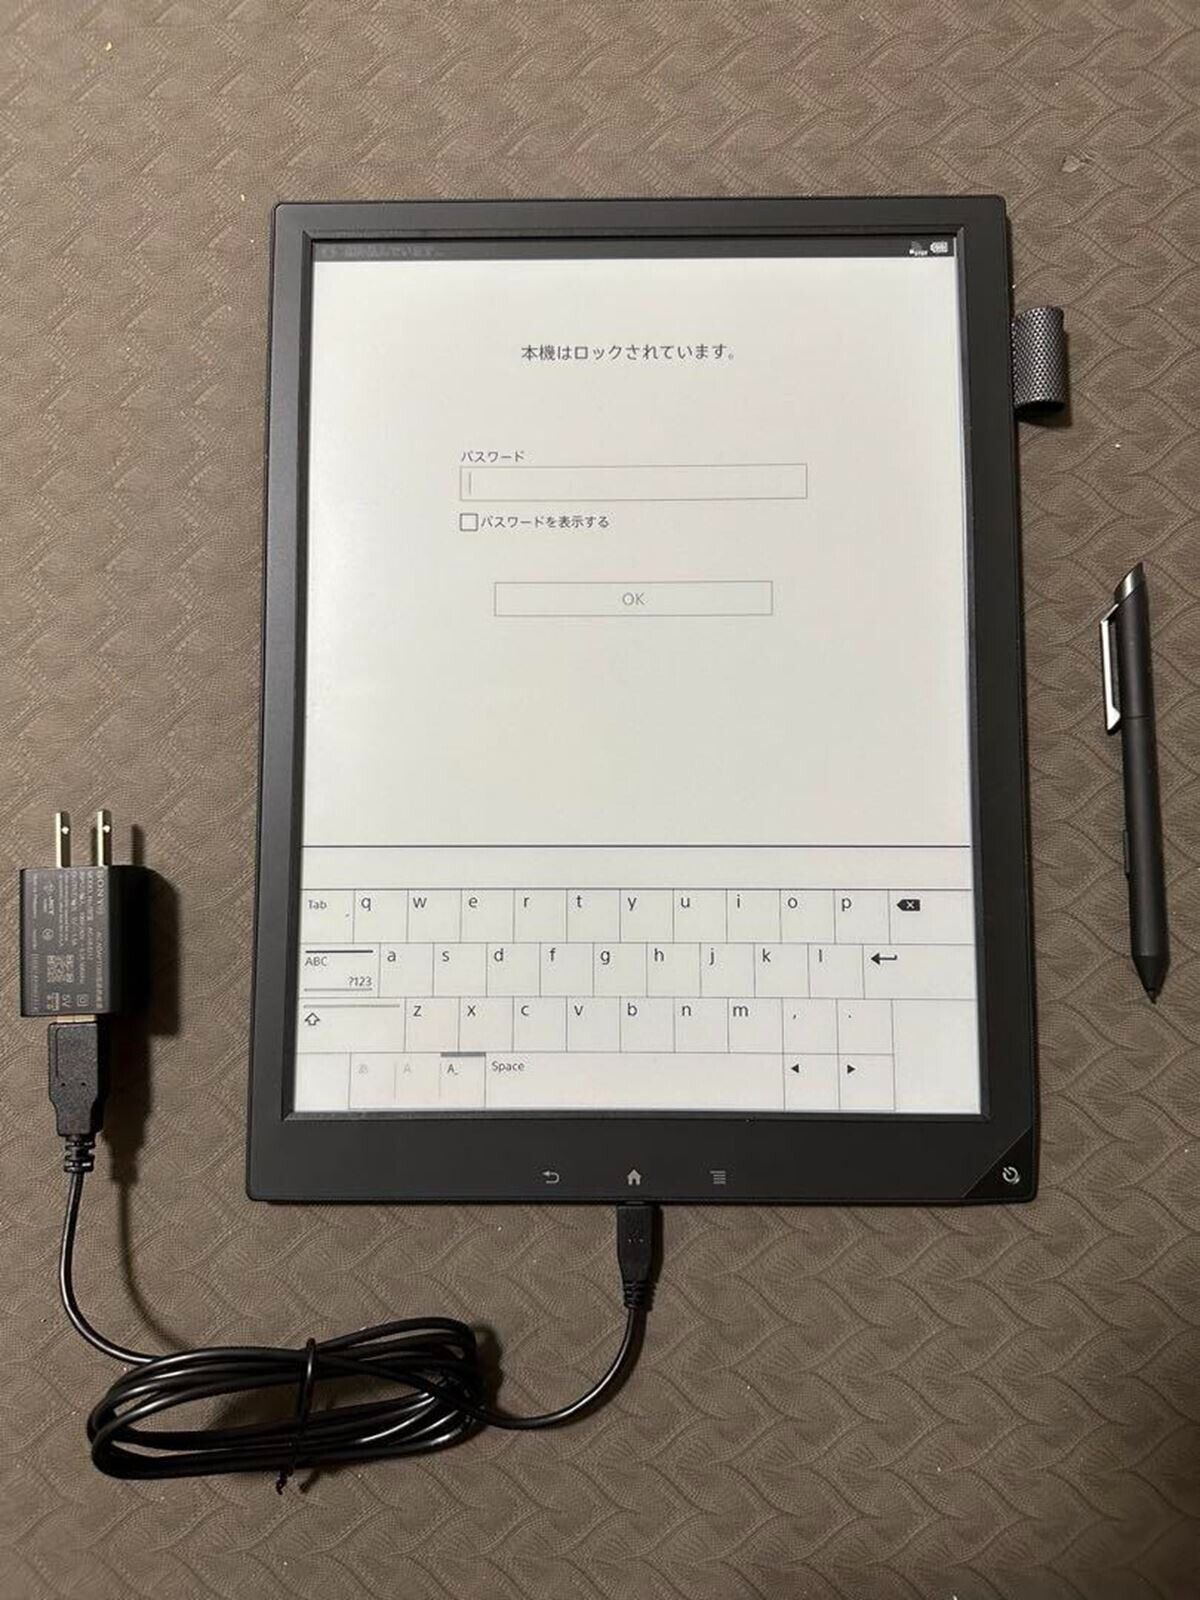 Sony Model DPT-S1 Digital Paper System Black Tablet 13.3 inch Used